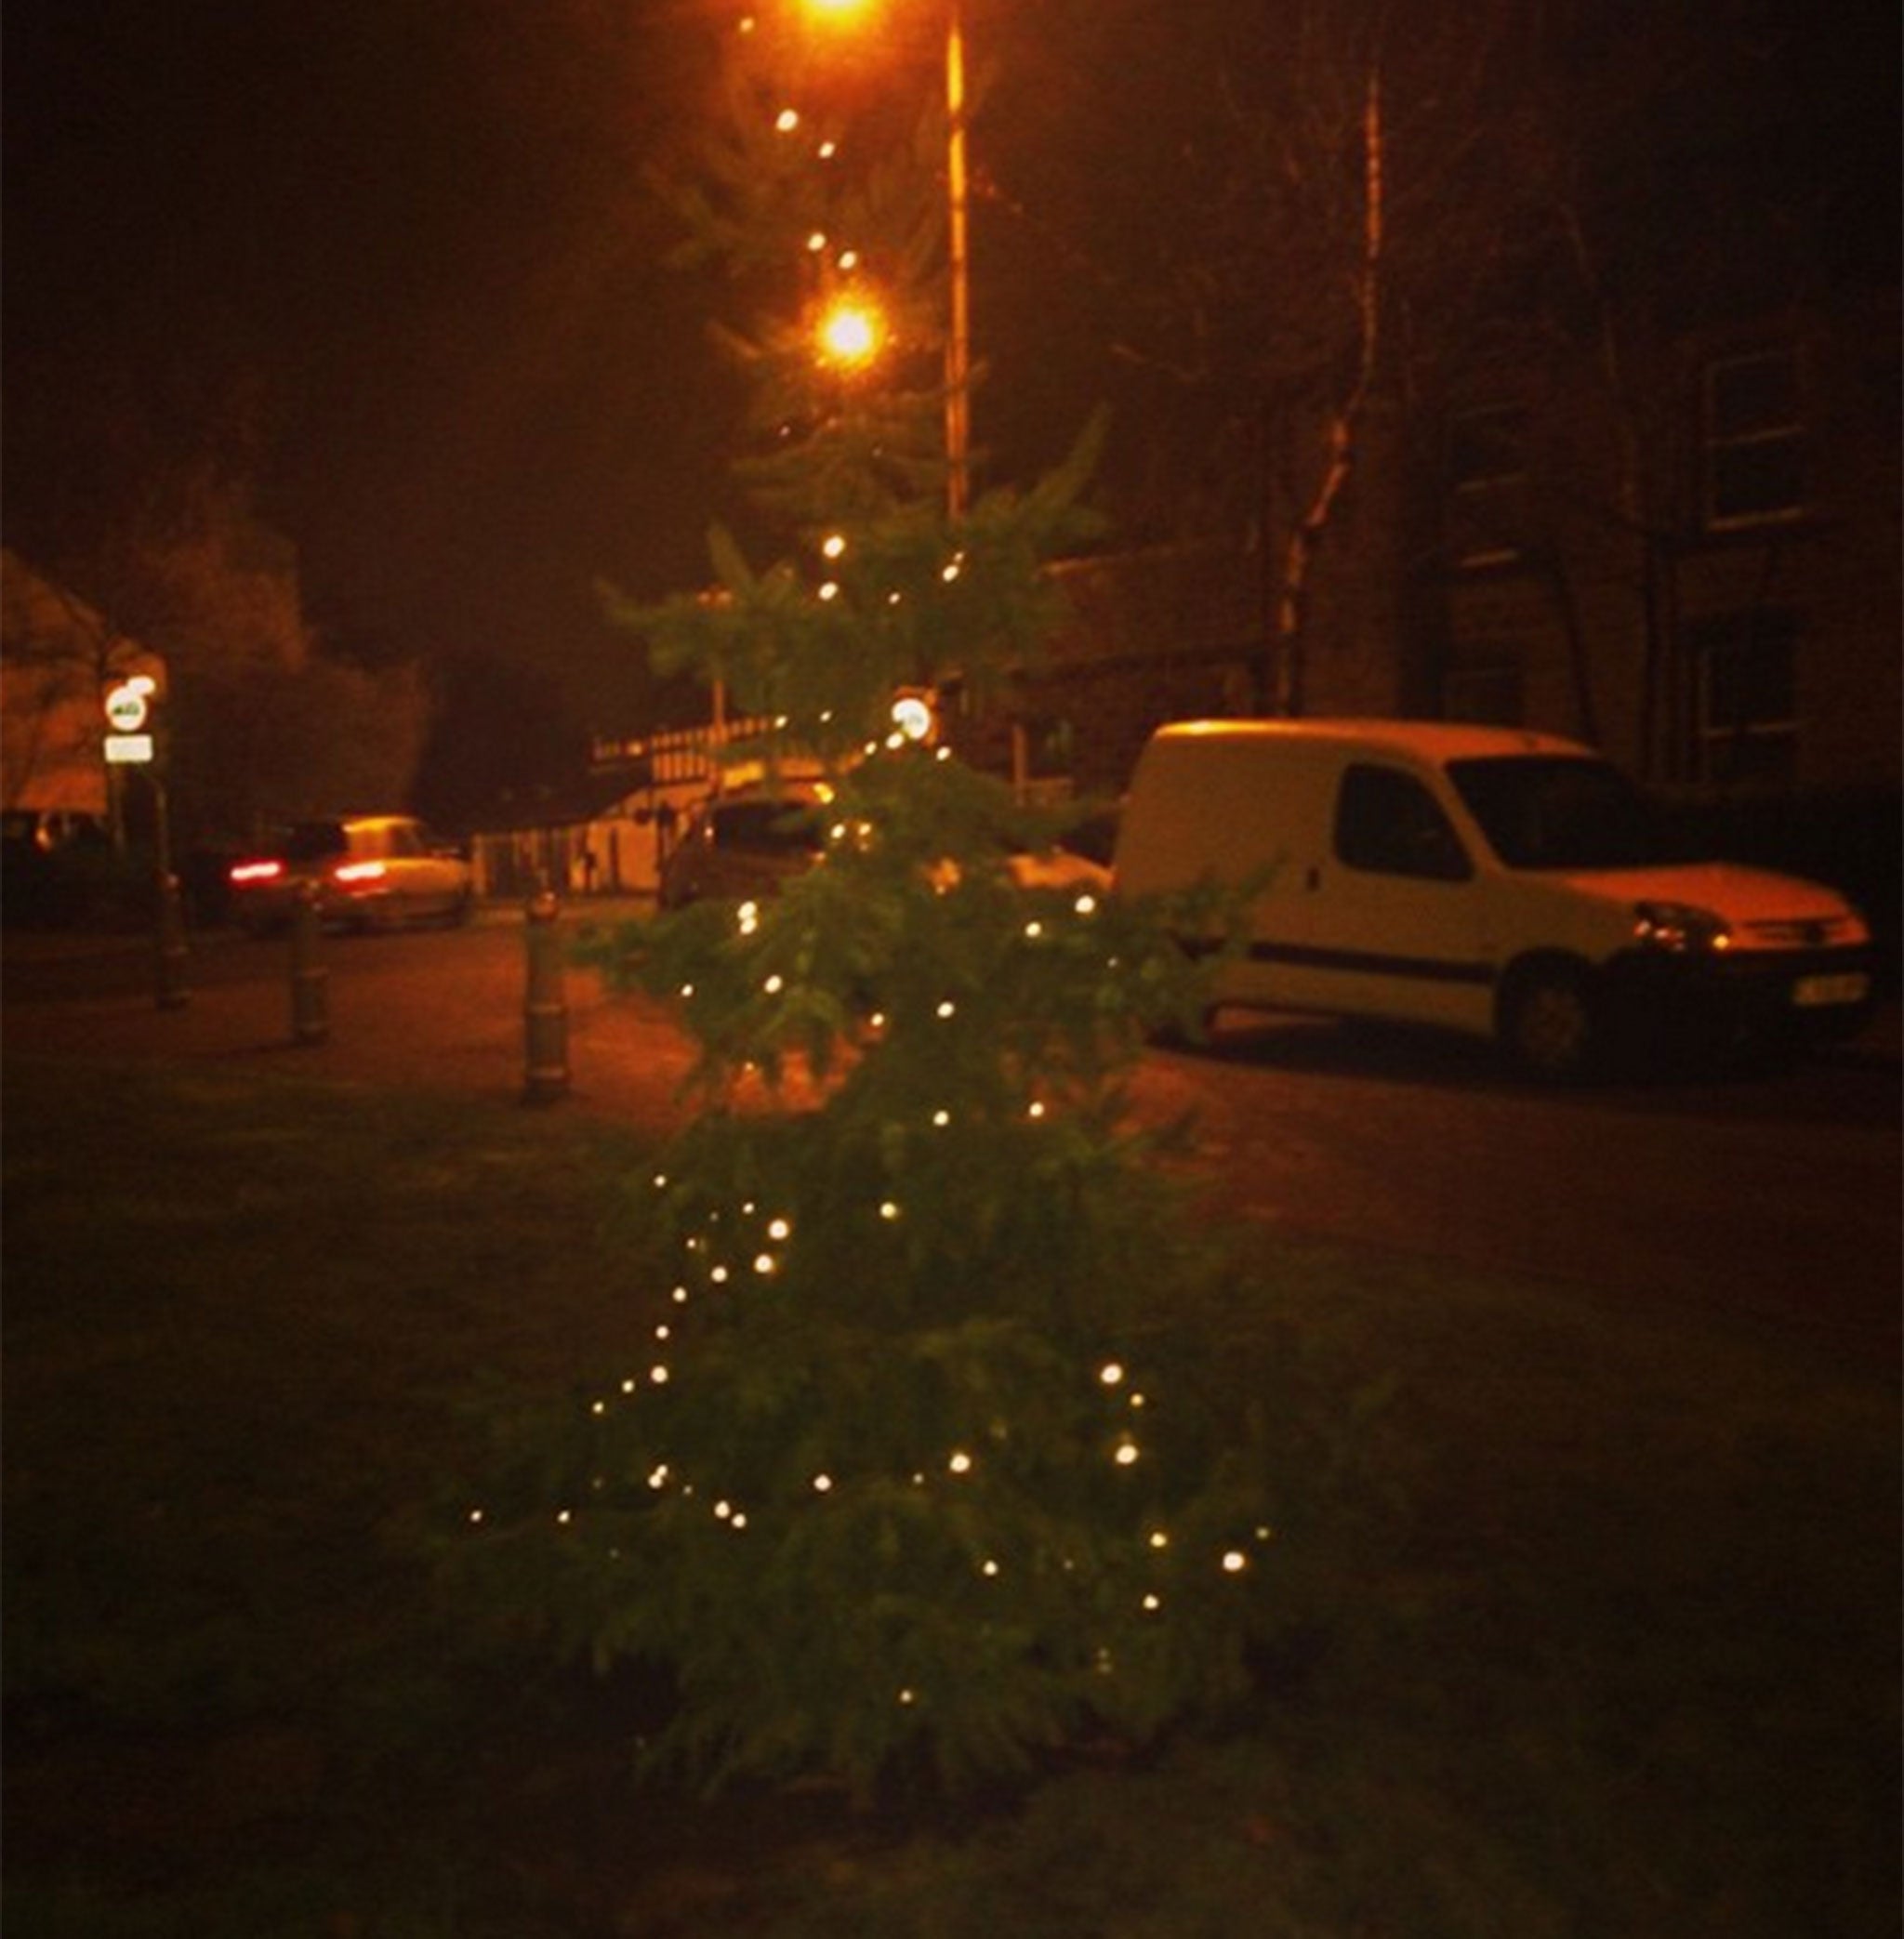 The Mottram Christmas tree